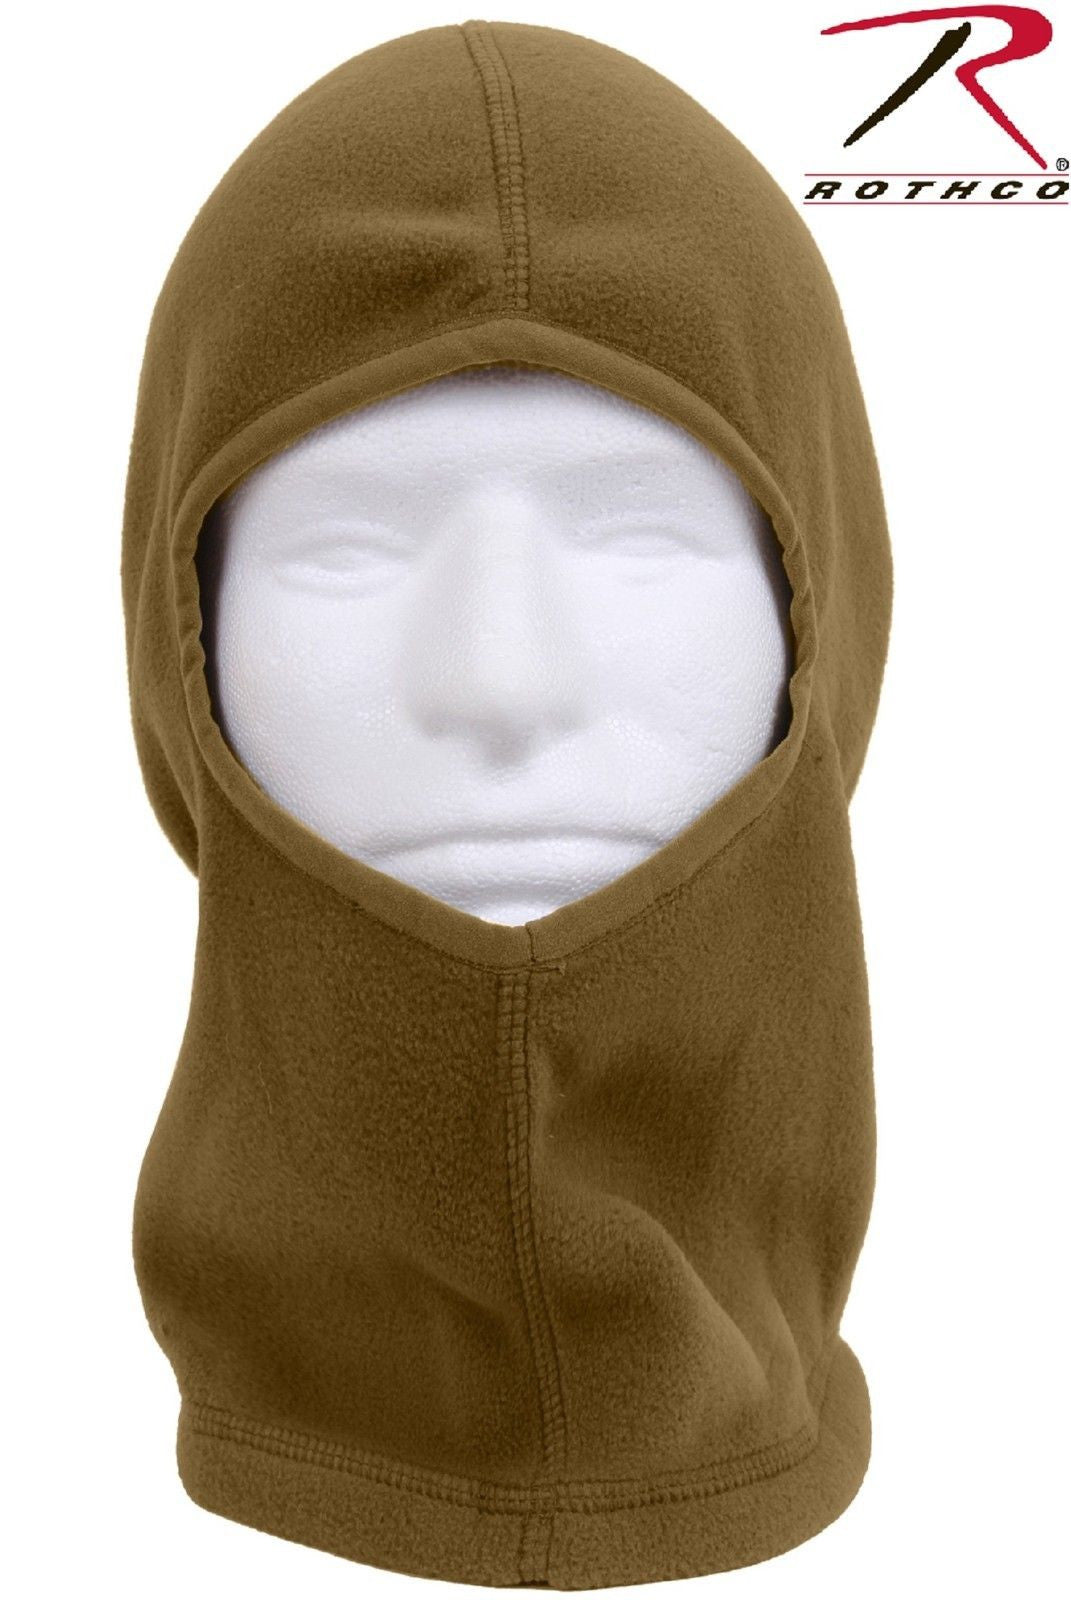 Coyote Brown Head, Neck & Face Cover Fleece Balaclava - Rothco Cold Weather Hood